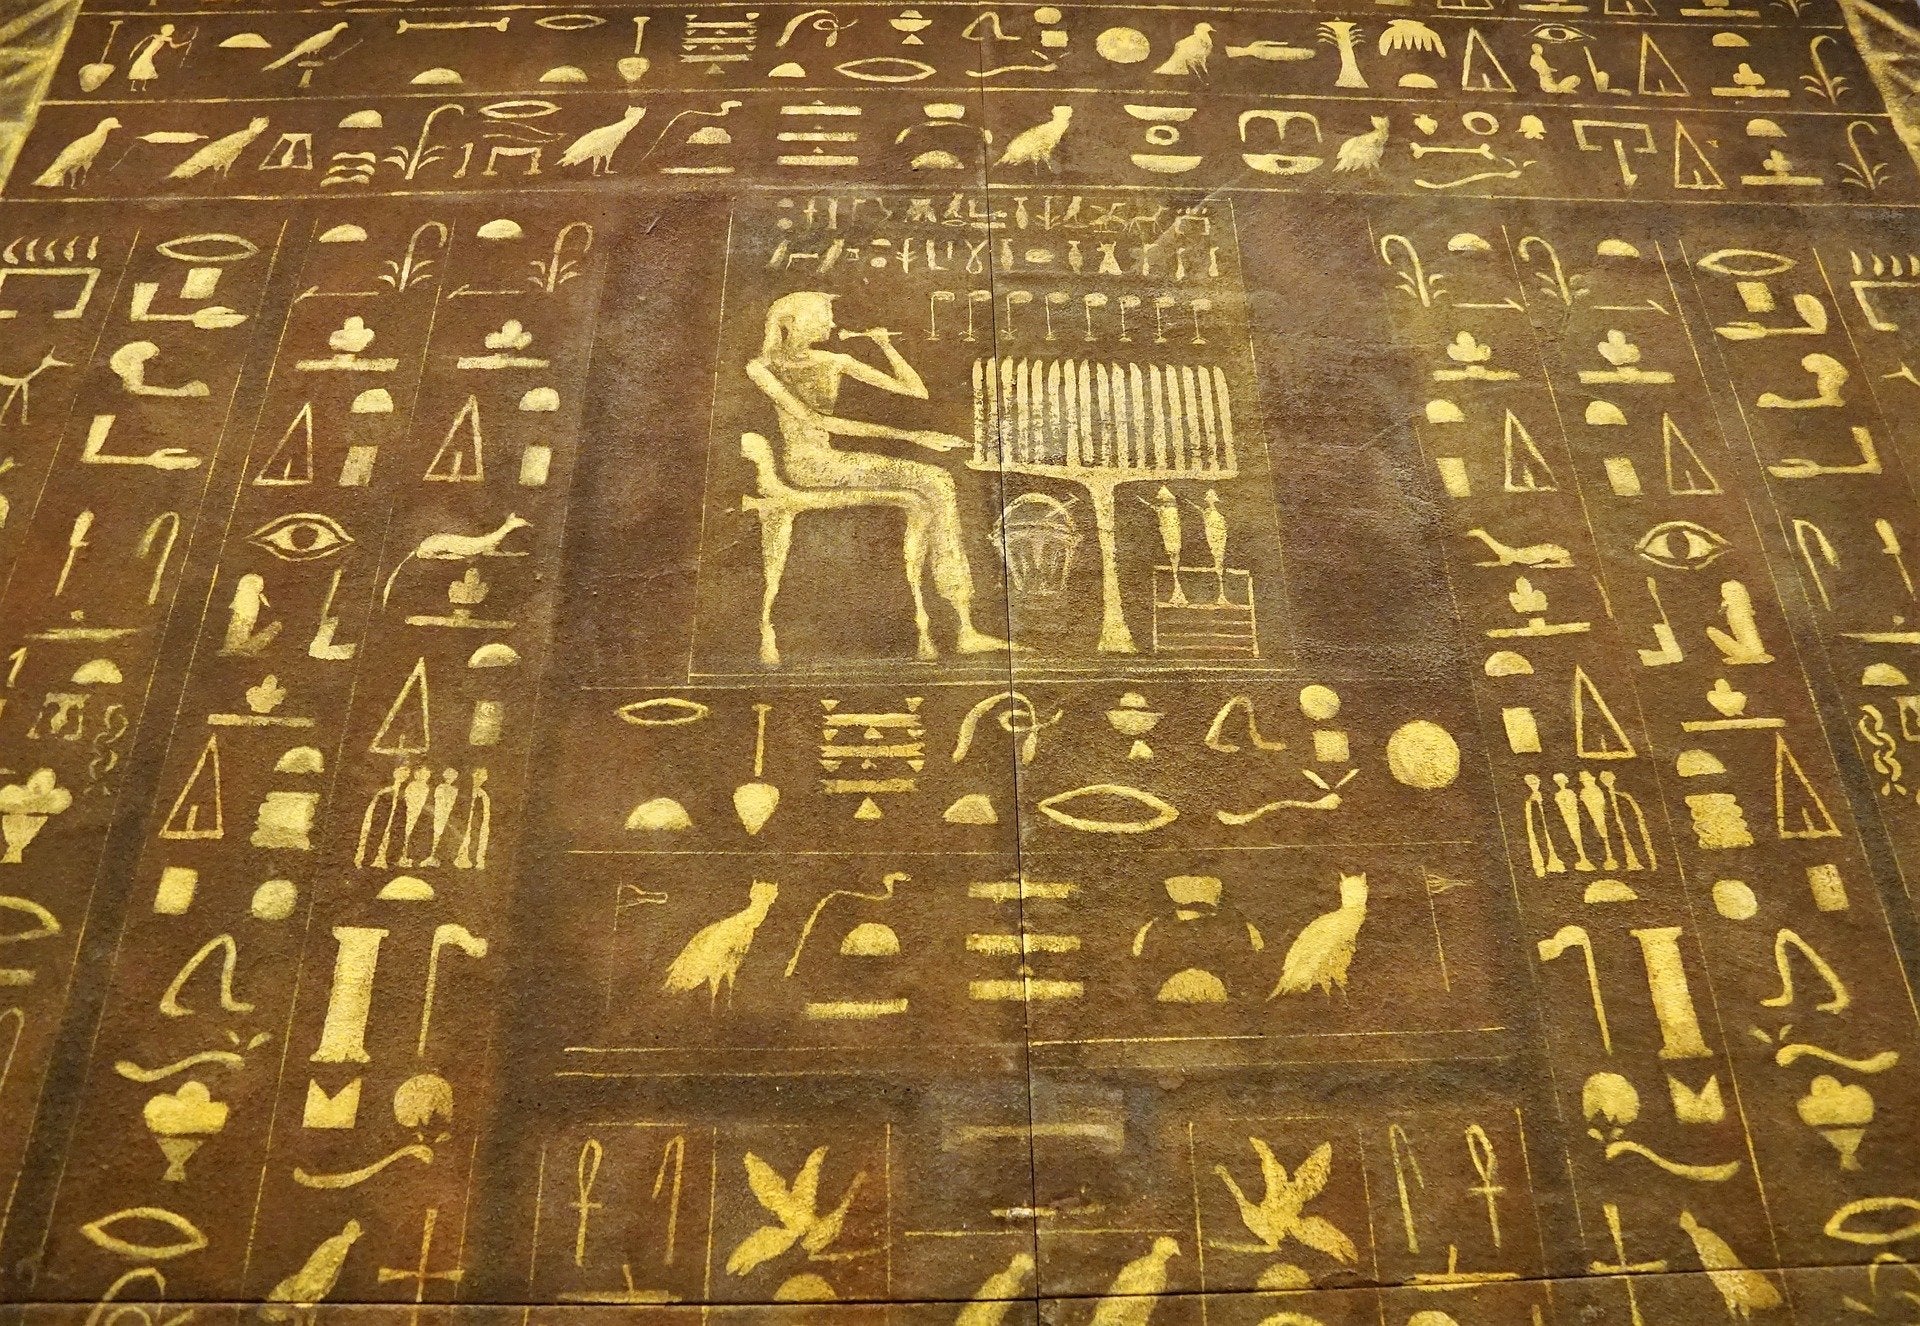 Ancient Egyptian Symbology Explained